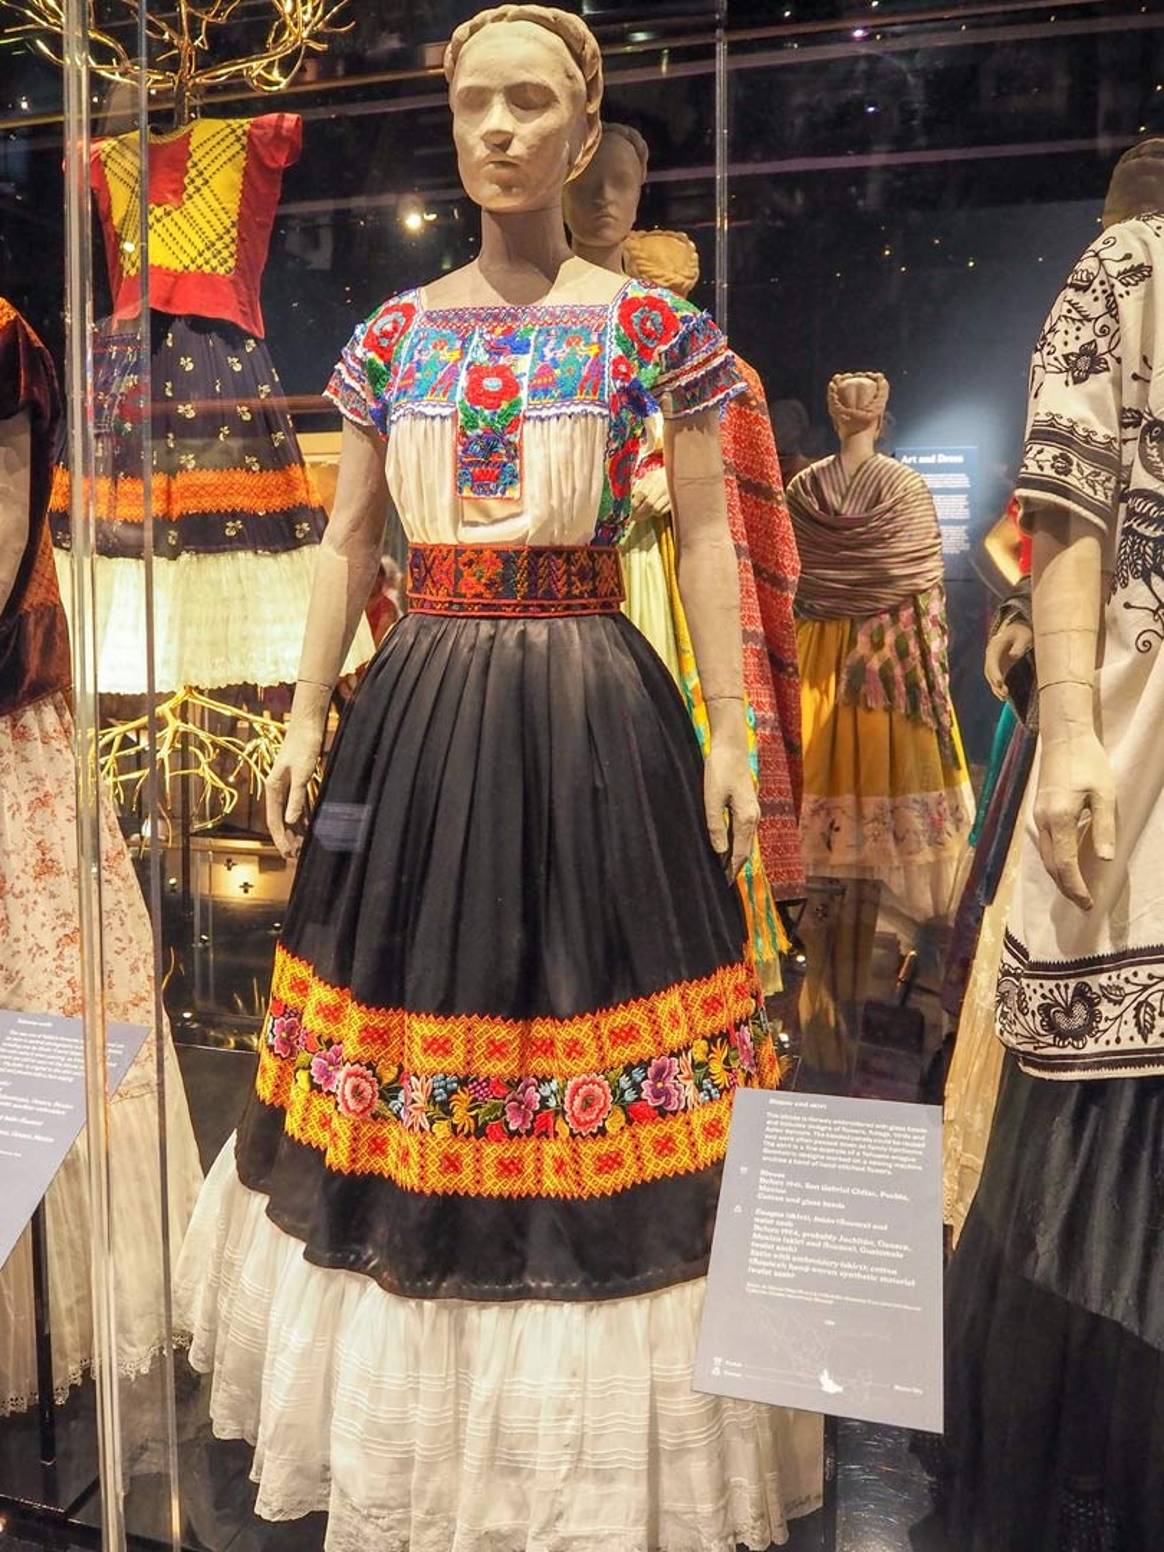 Inside the Frida Kahlo exhibition at the V&A